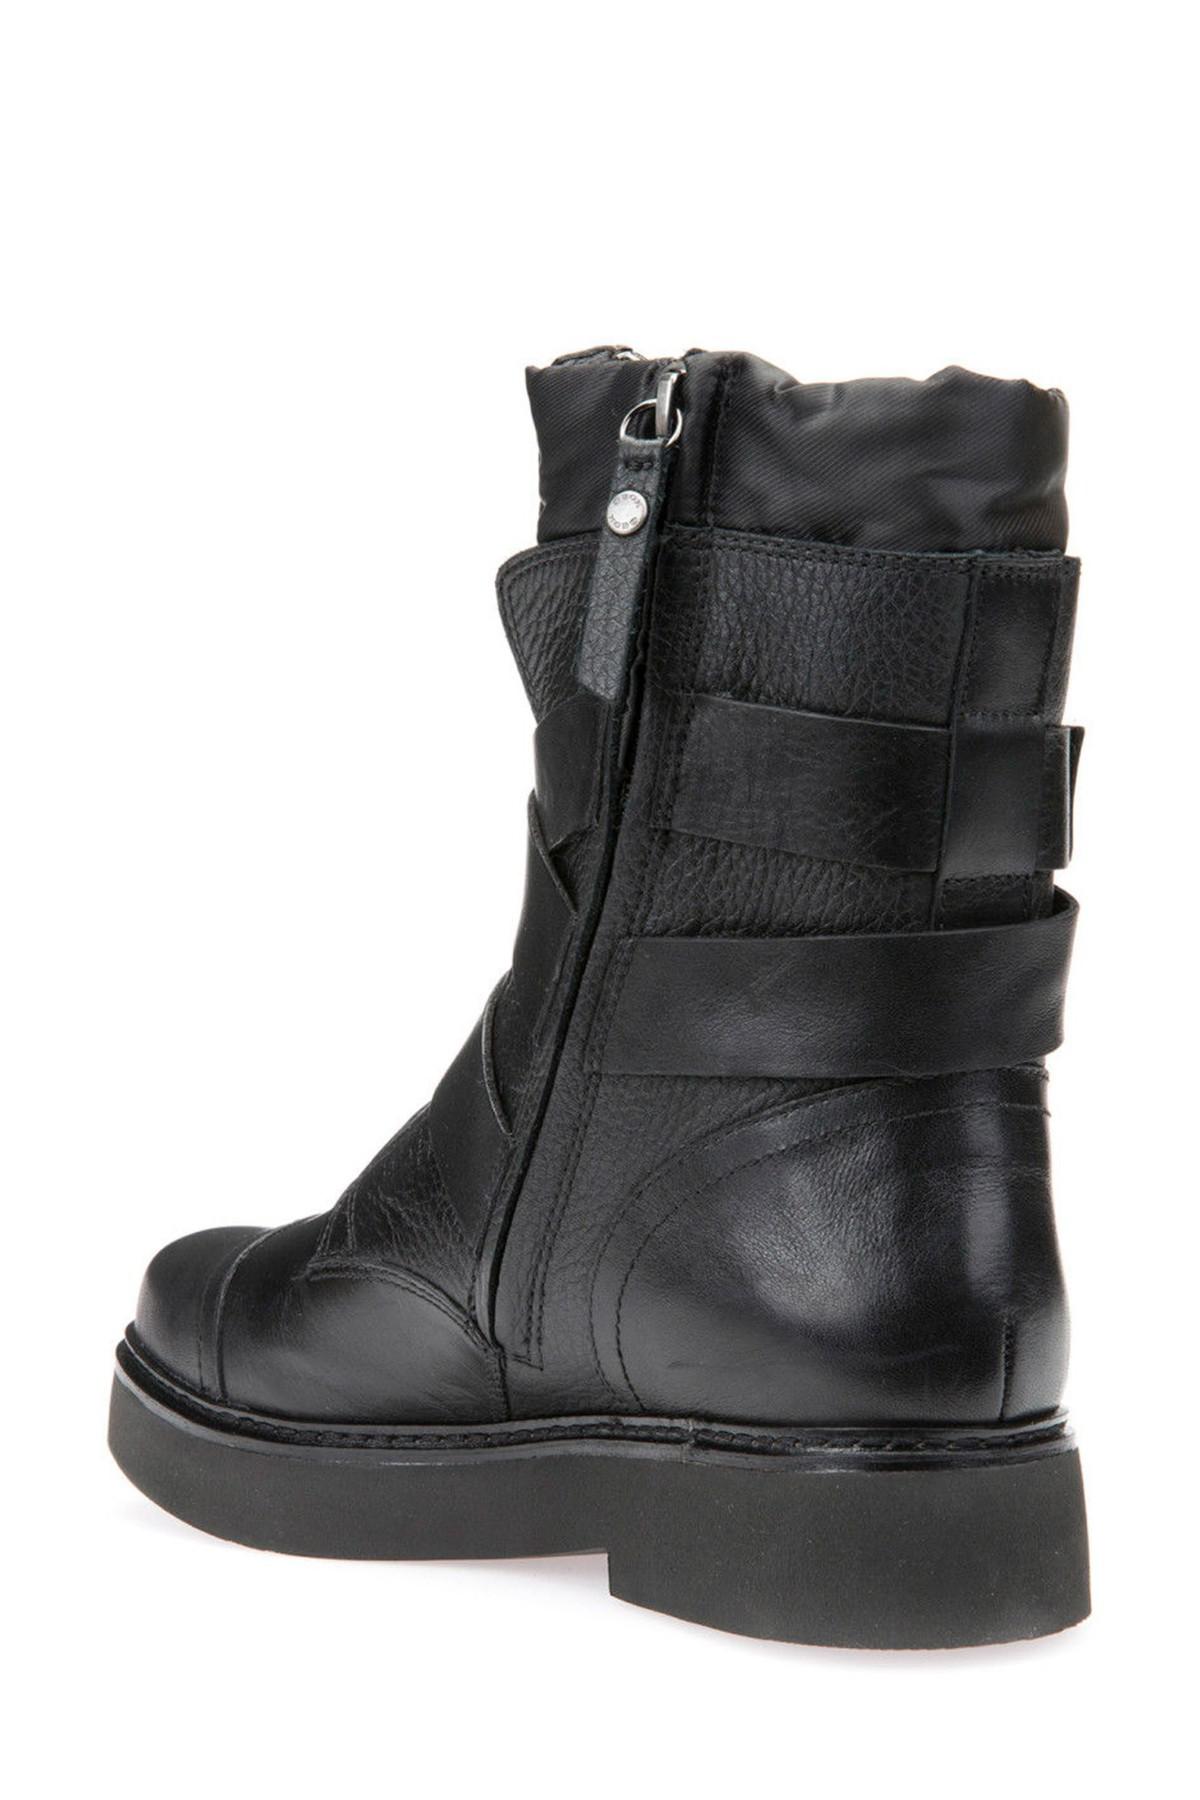 Geox Rayssa Moto Boot in Black Leather (Black) - Lyst